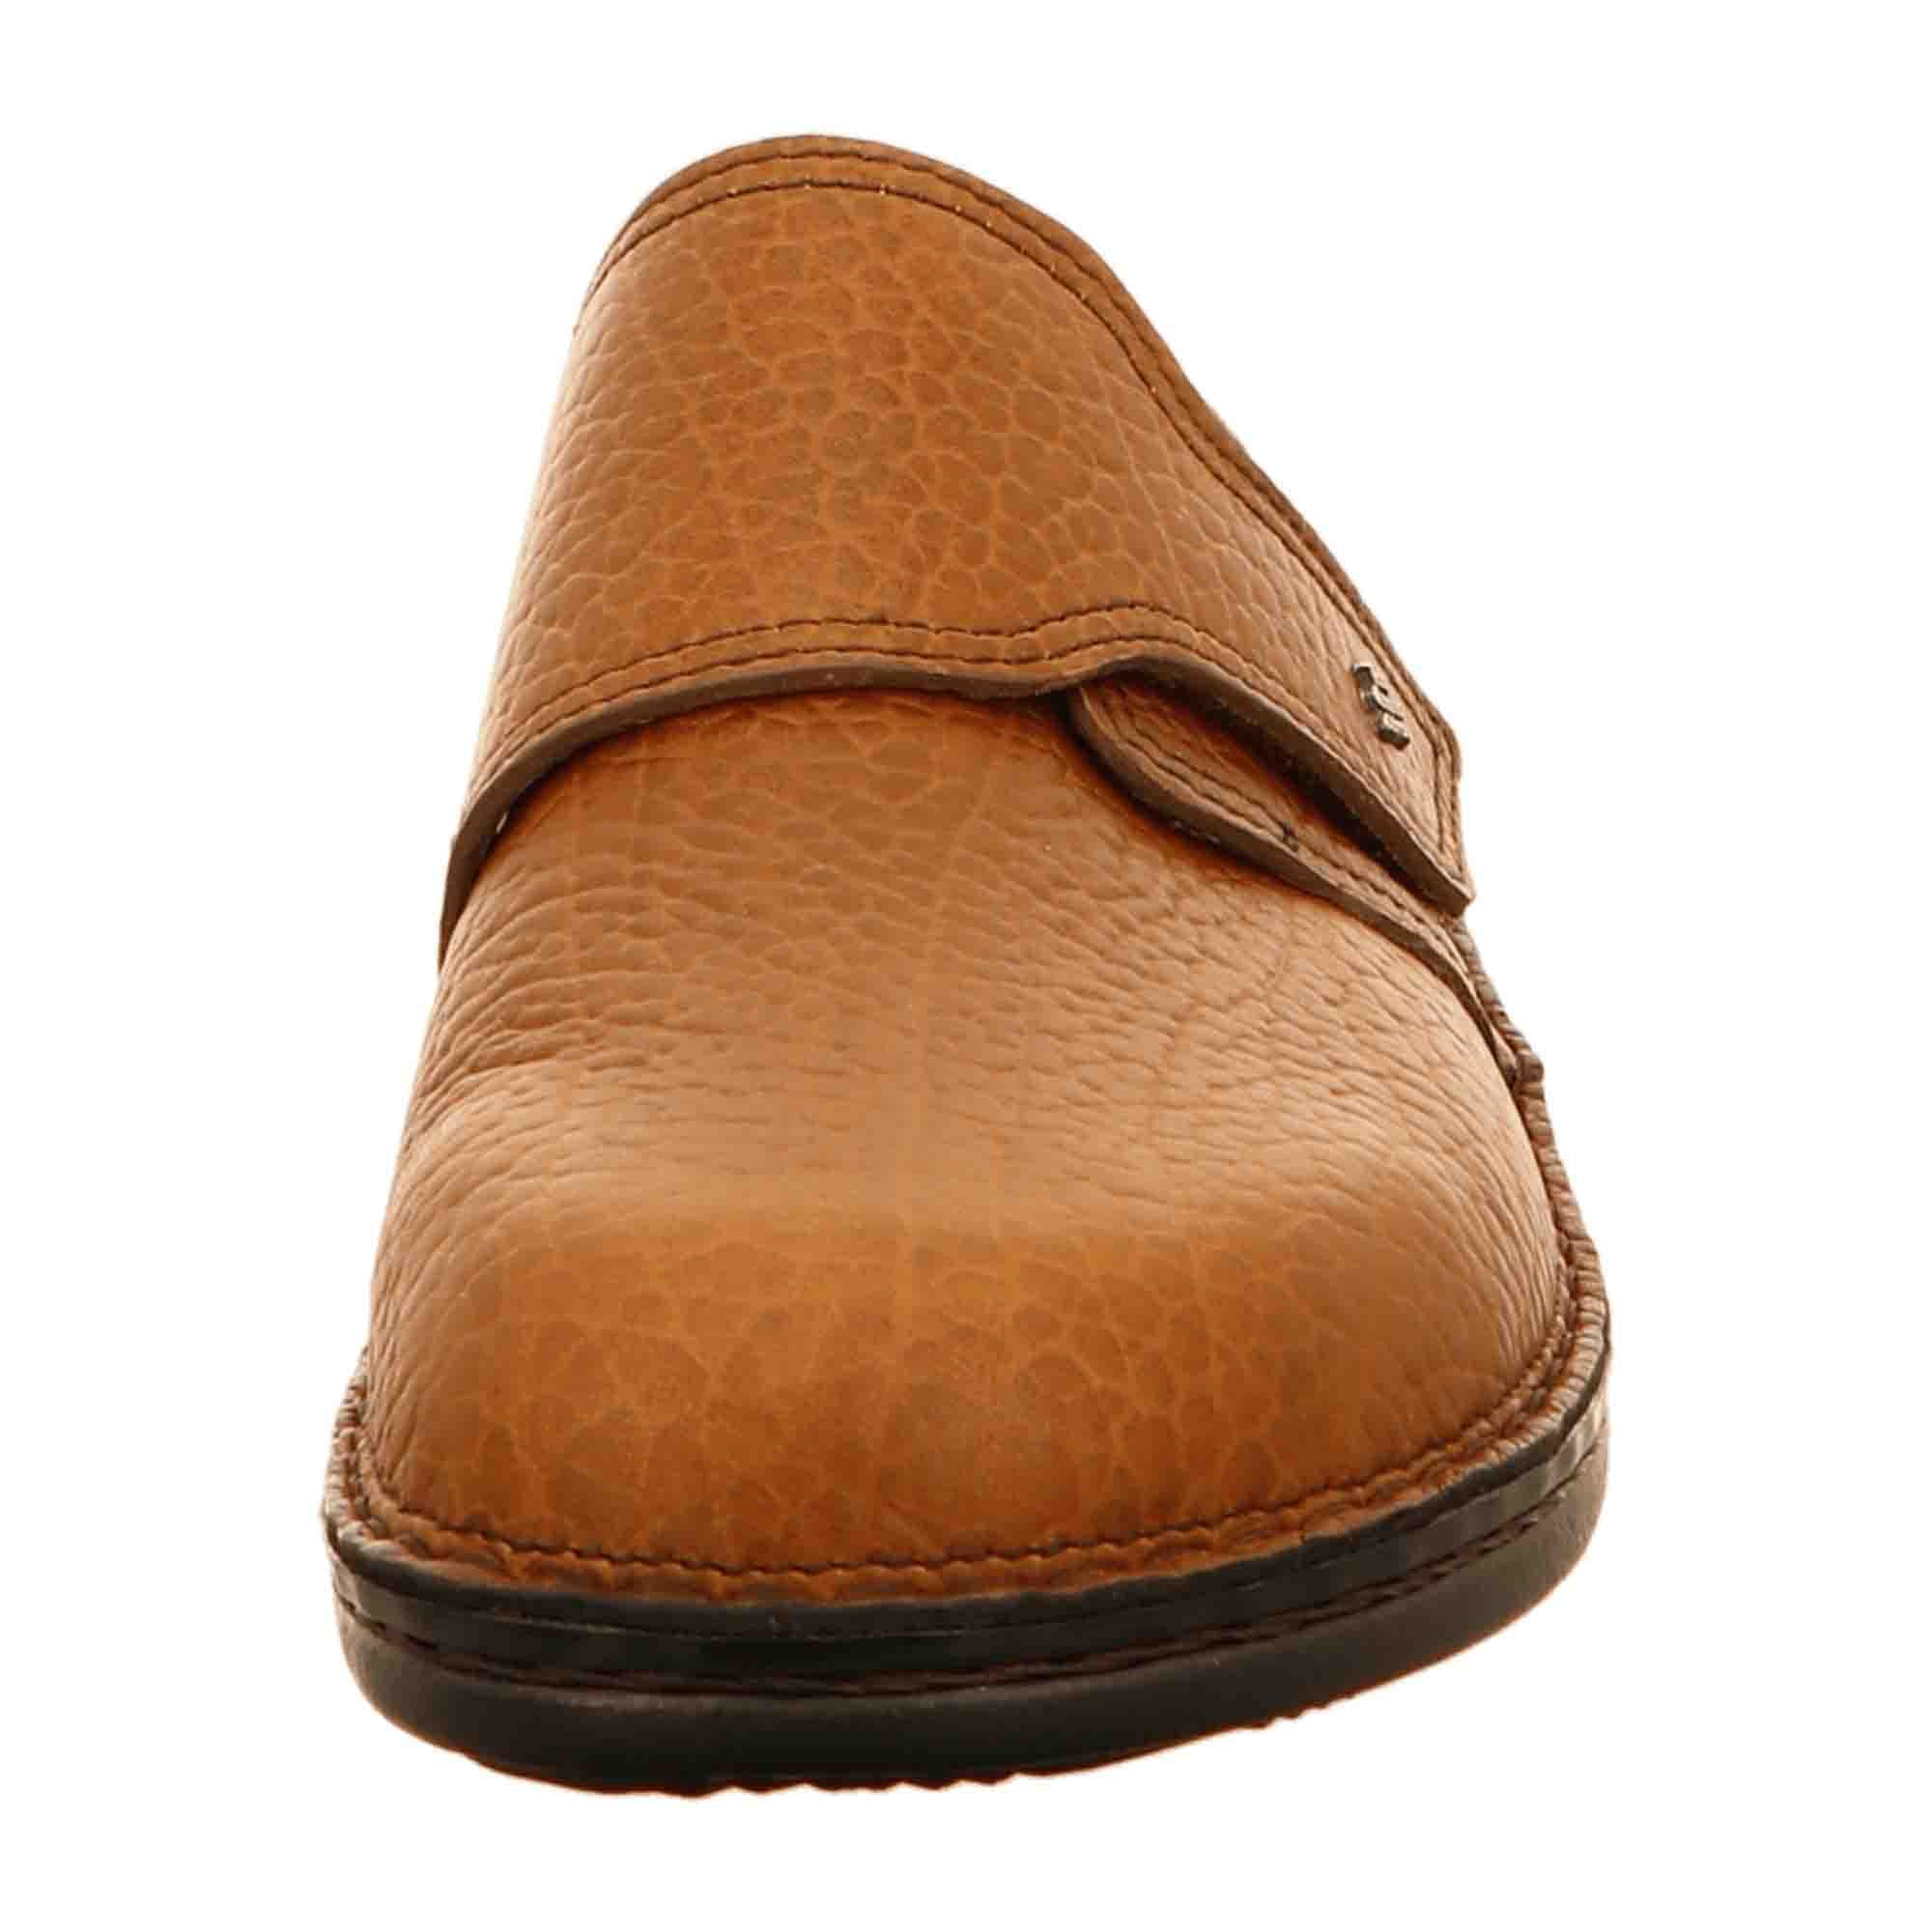 Finn Comfort Amalfi Men's Comfortable Leather Clogs - Brown